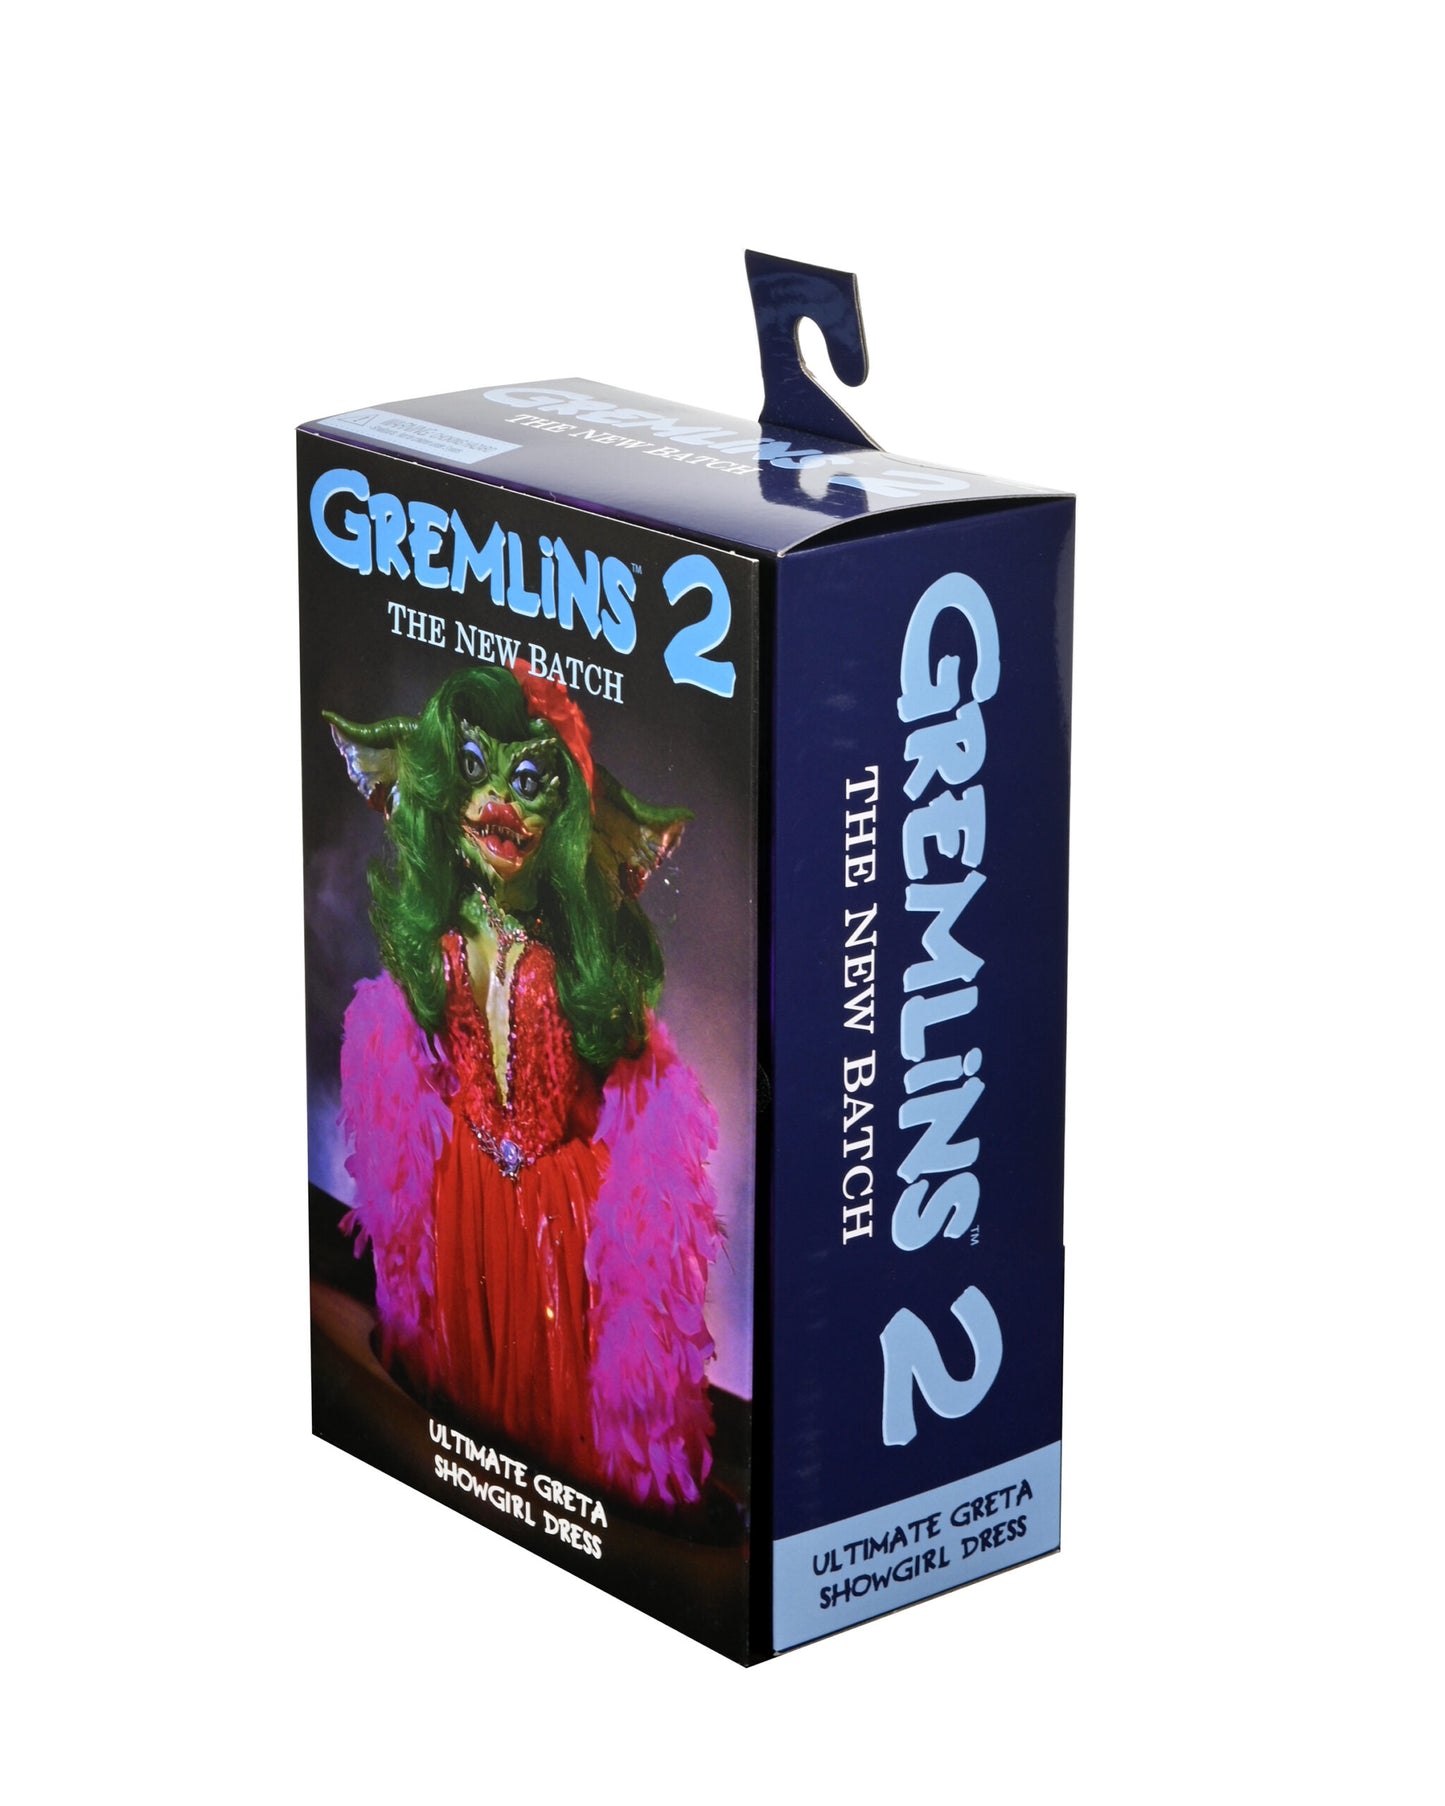 Neca Gremlins 2: The New Batch Greta Showgirl Dress SDCC 2023